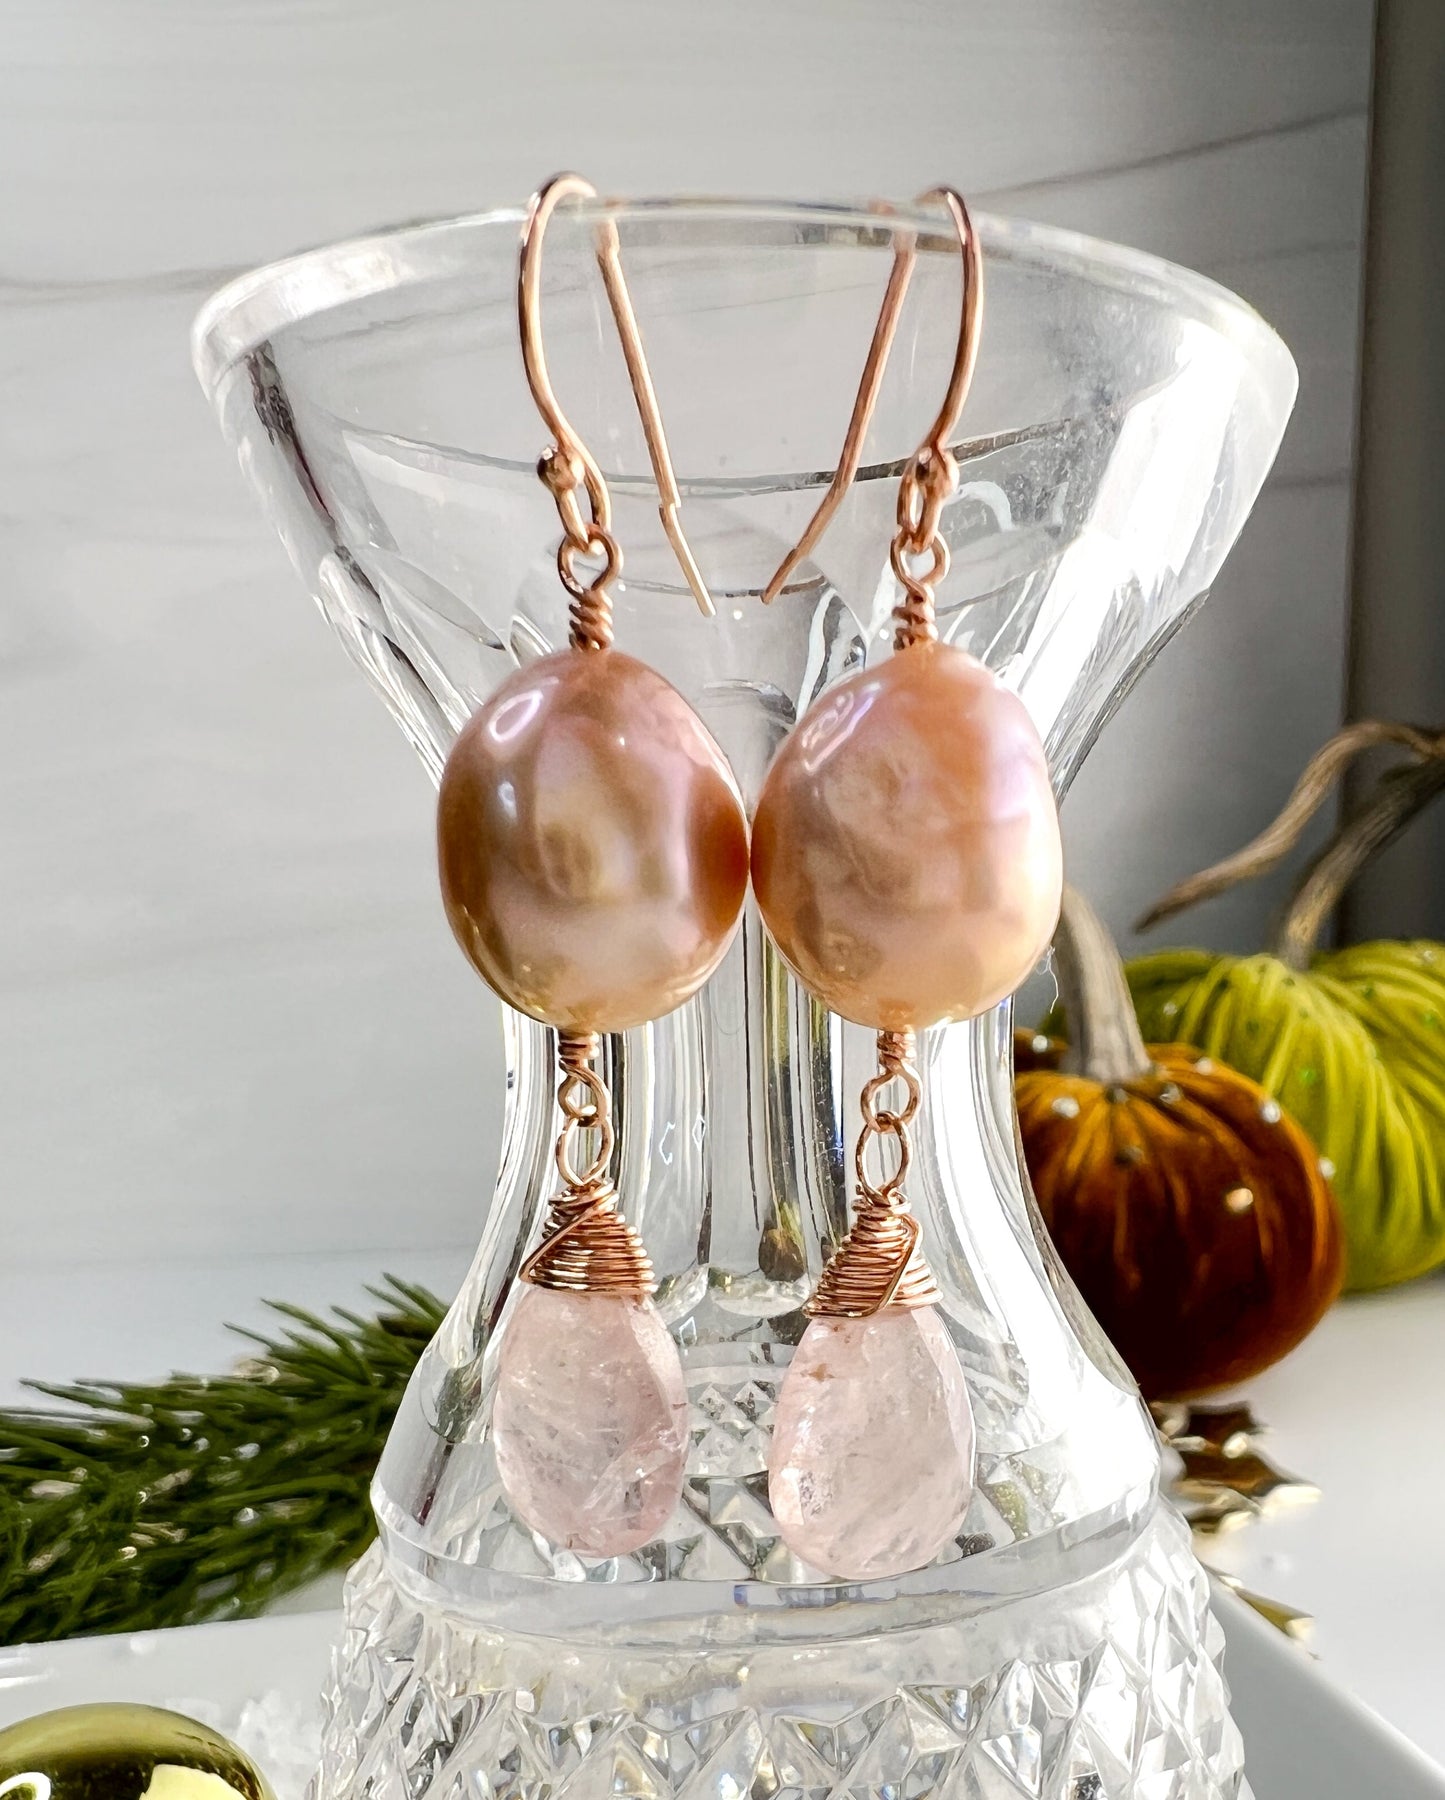 Peach/Pink Baroque Pearl and Morganite Earrings